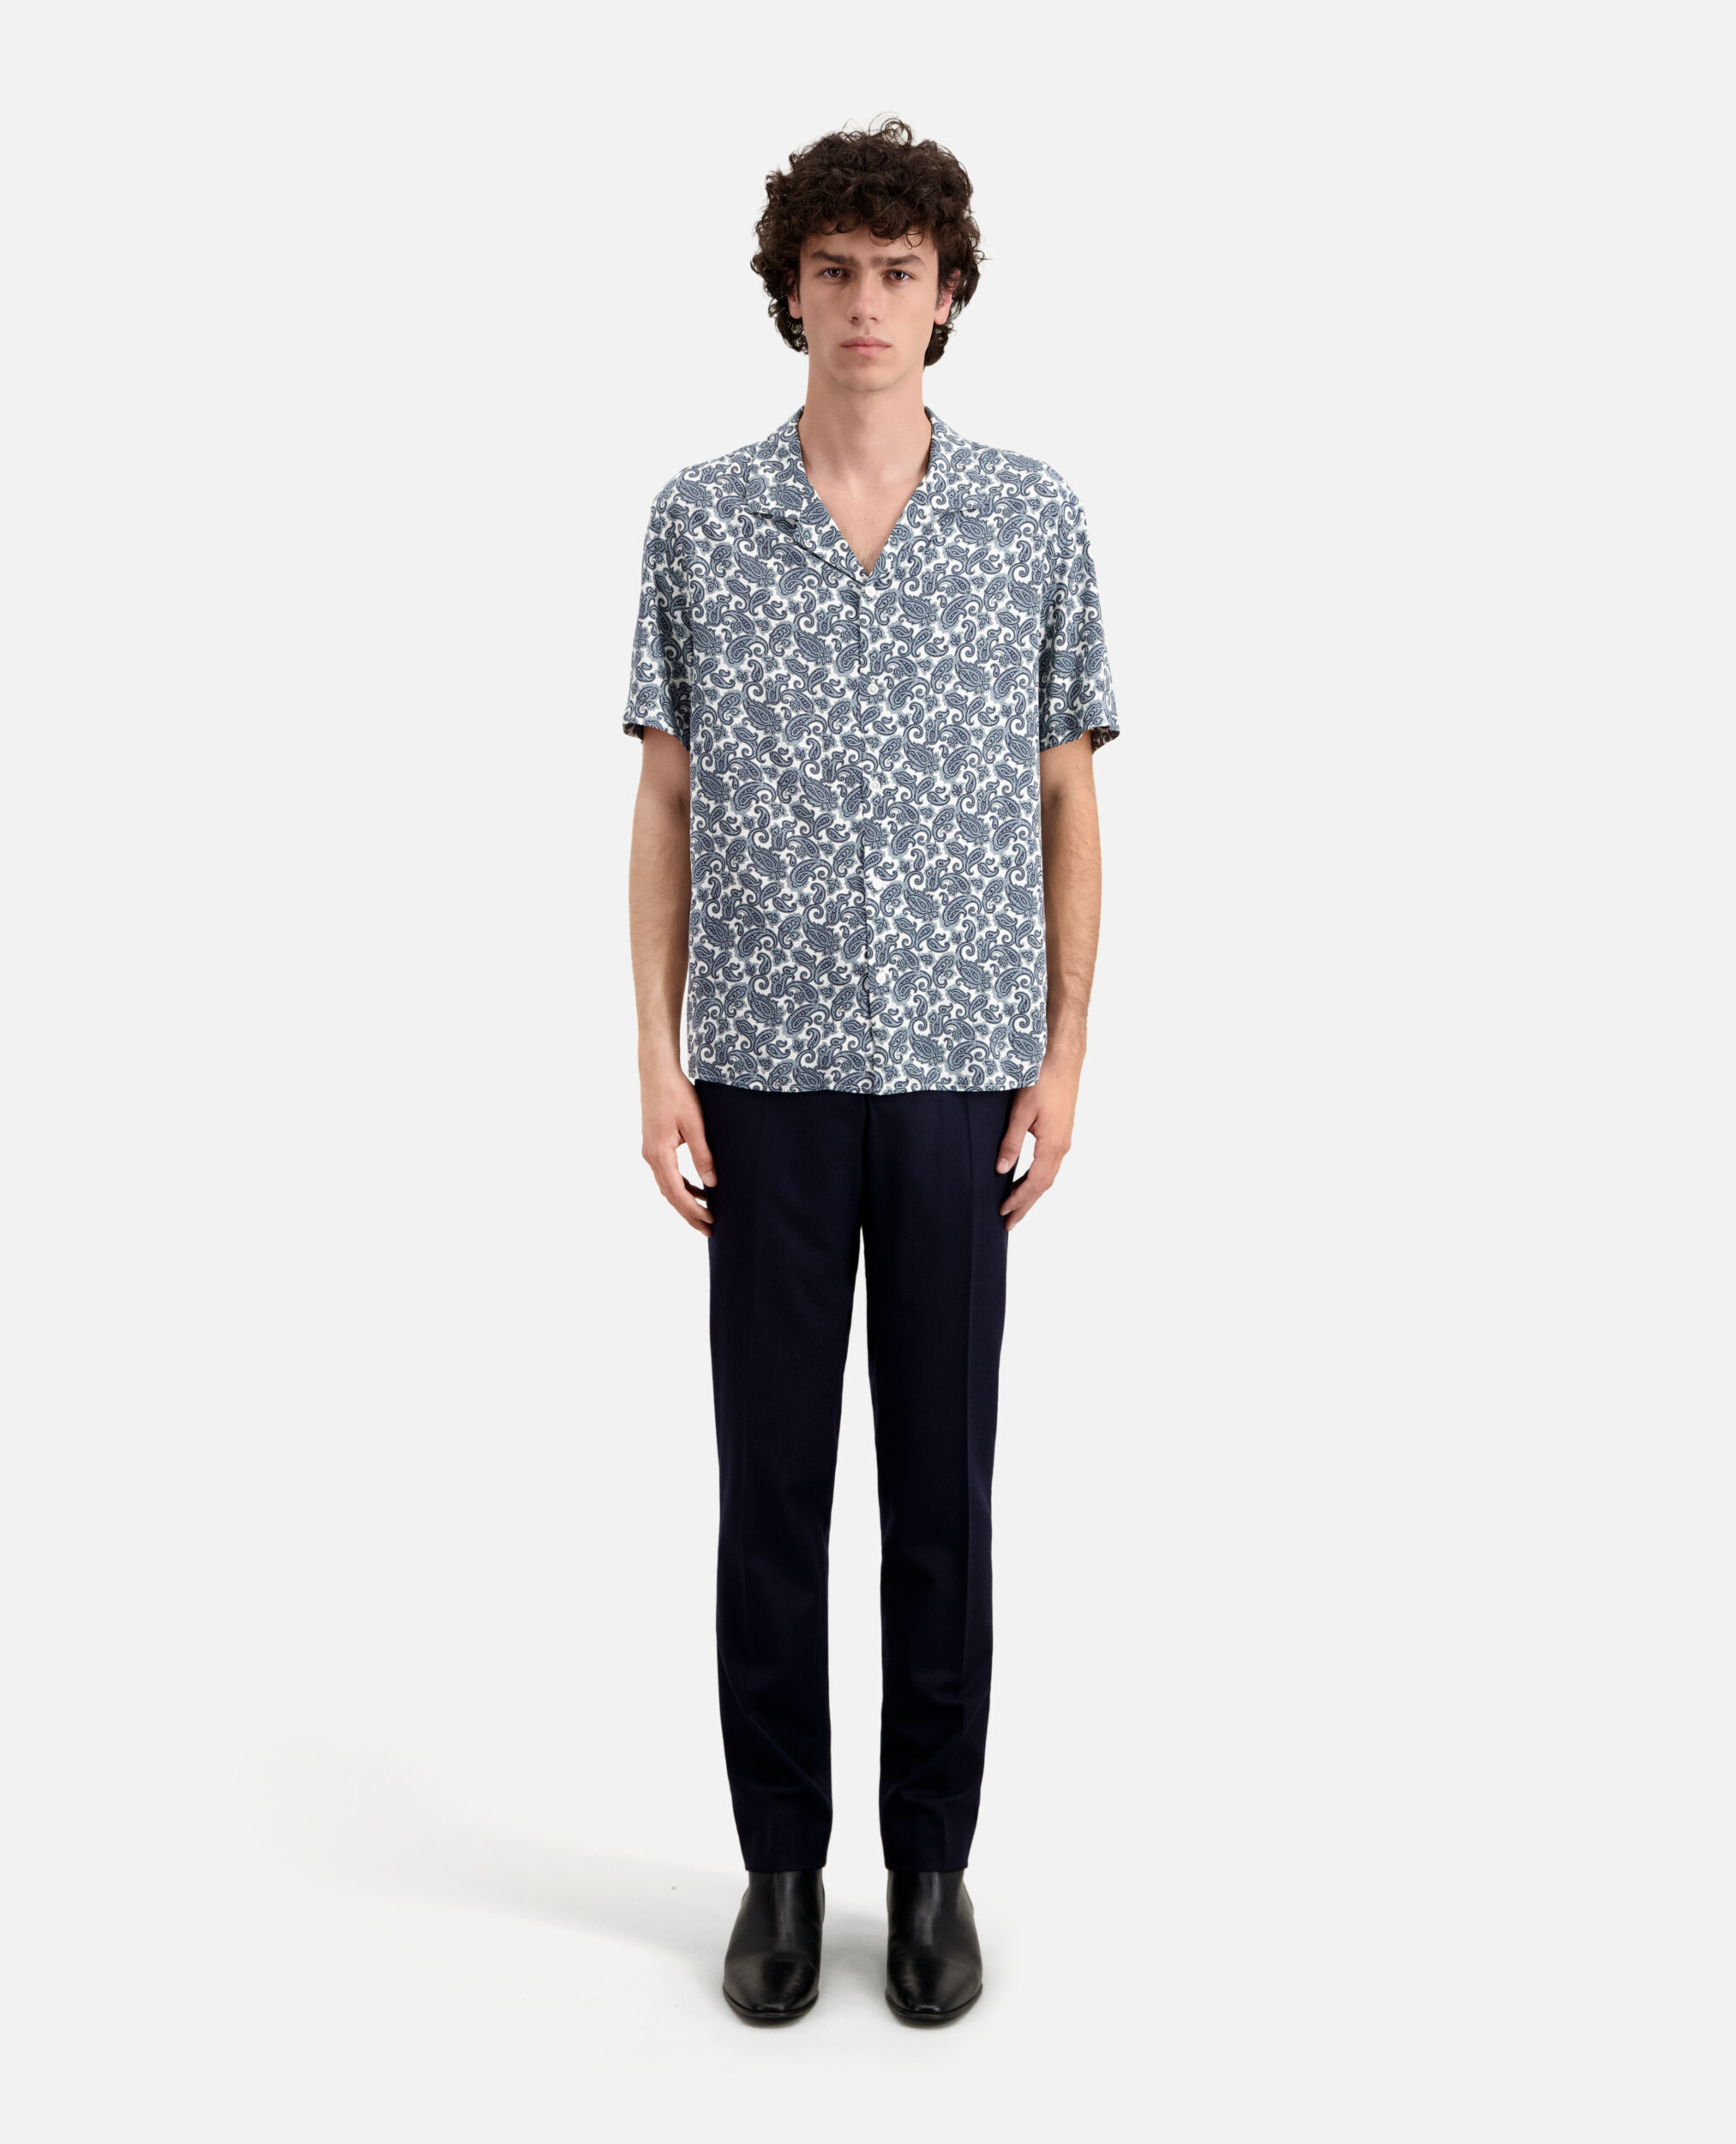 Short sleeved printed shirt, WHITE - BLUE, hi-res image number null